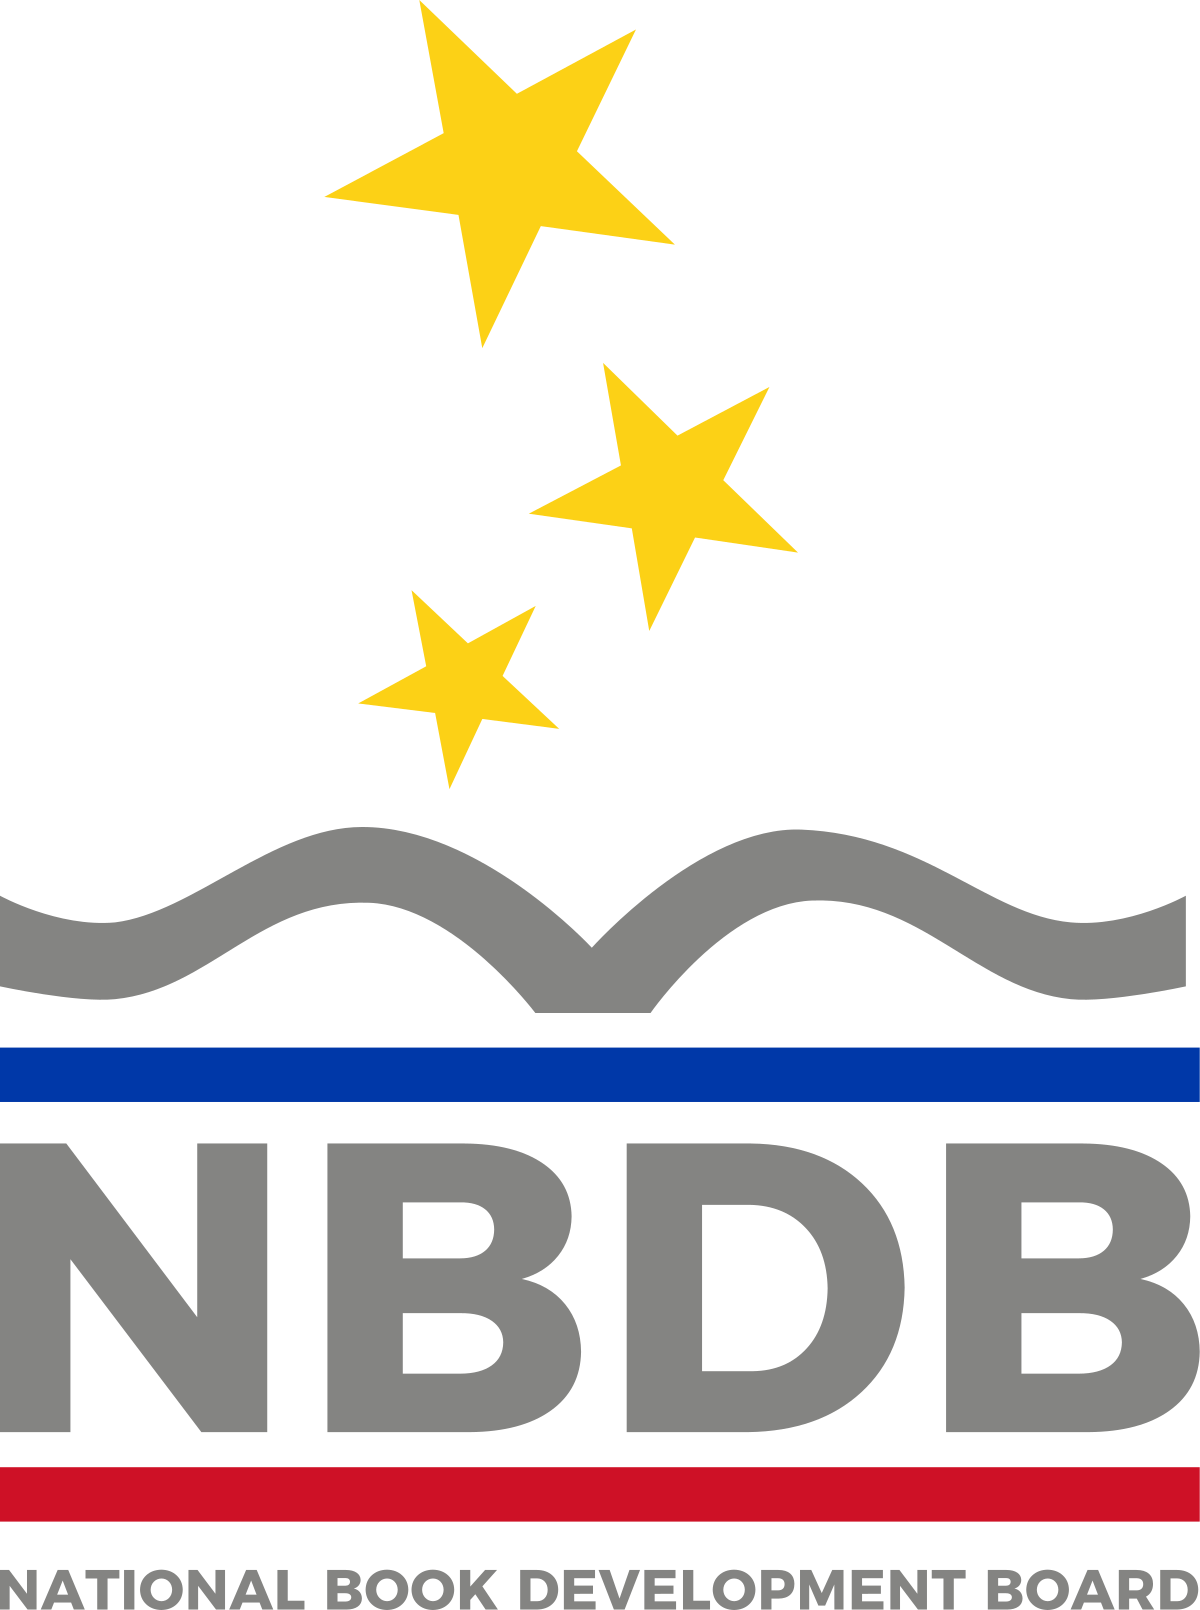 National Book Development Board Logo Philippines (1200x1610)